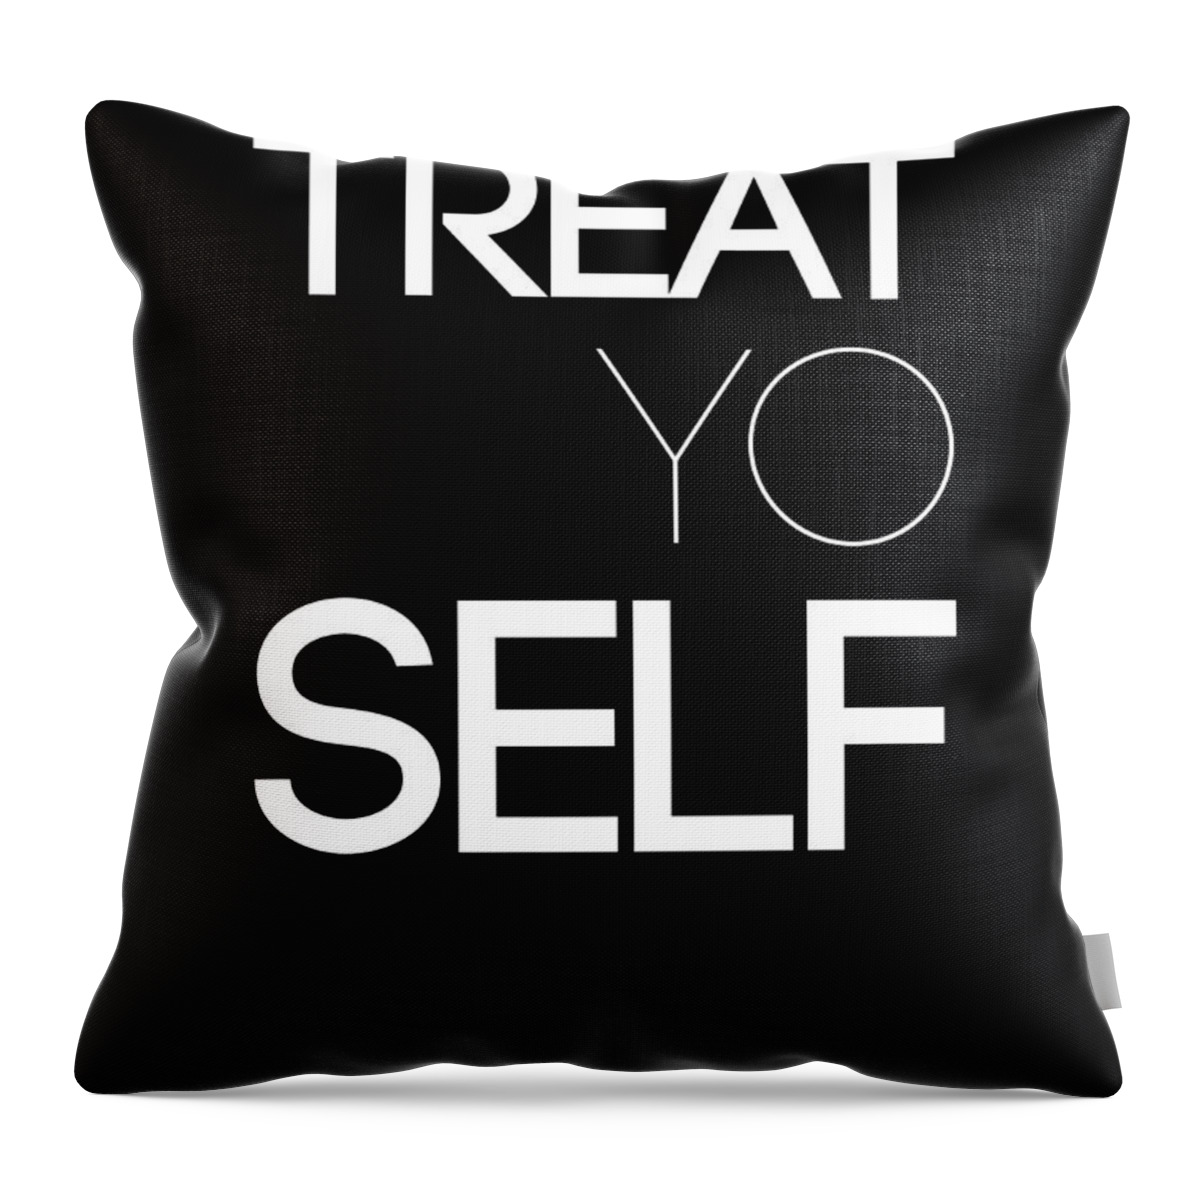  Throw Pillow featuring the digital art Treat Yo Self Poster 1 by Naxart Studio